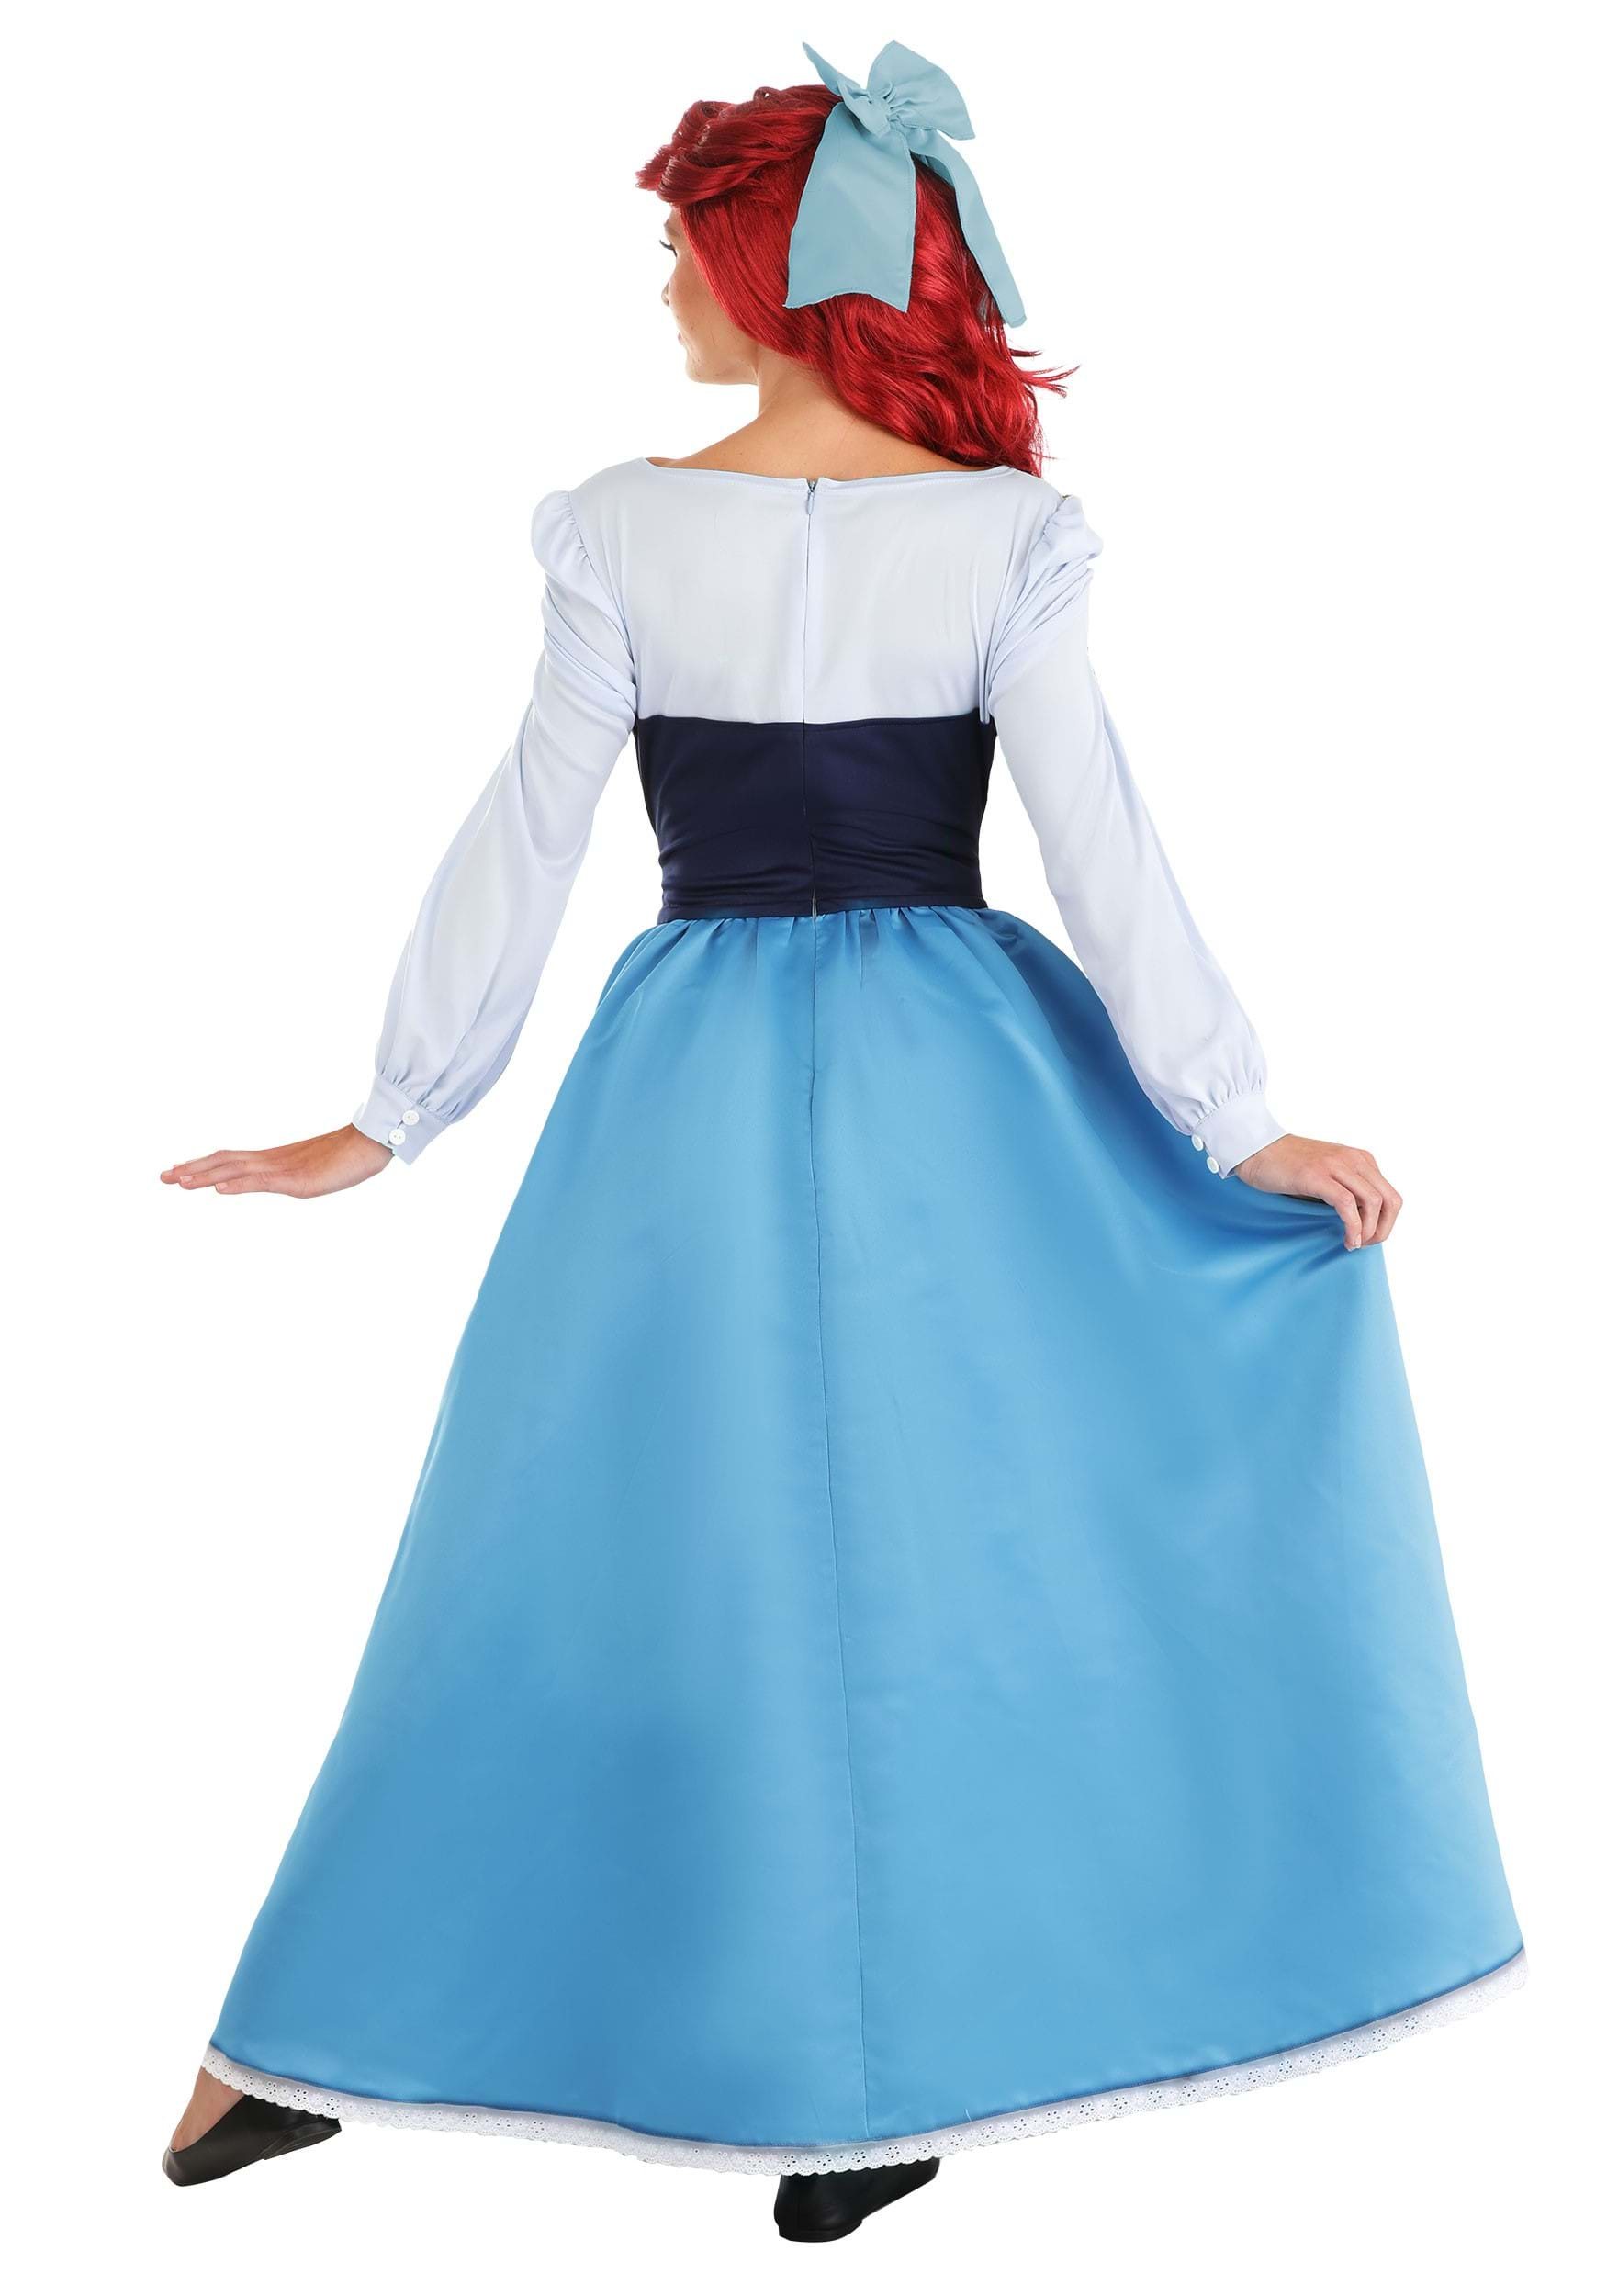 Disney's The Little Mermaid Ariel Blue Costume Dress for Women